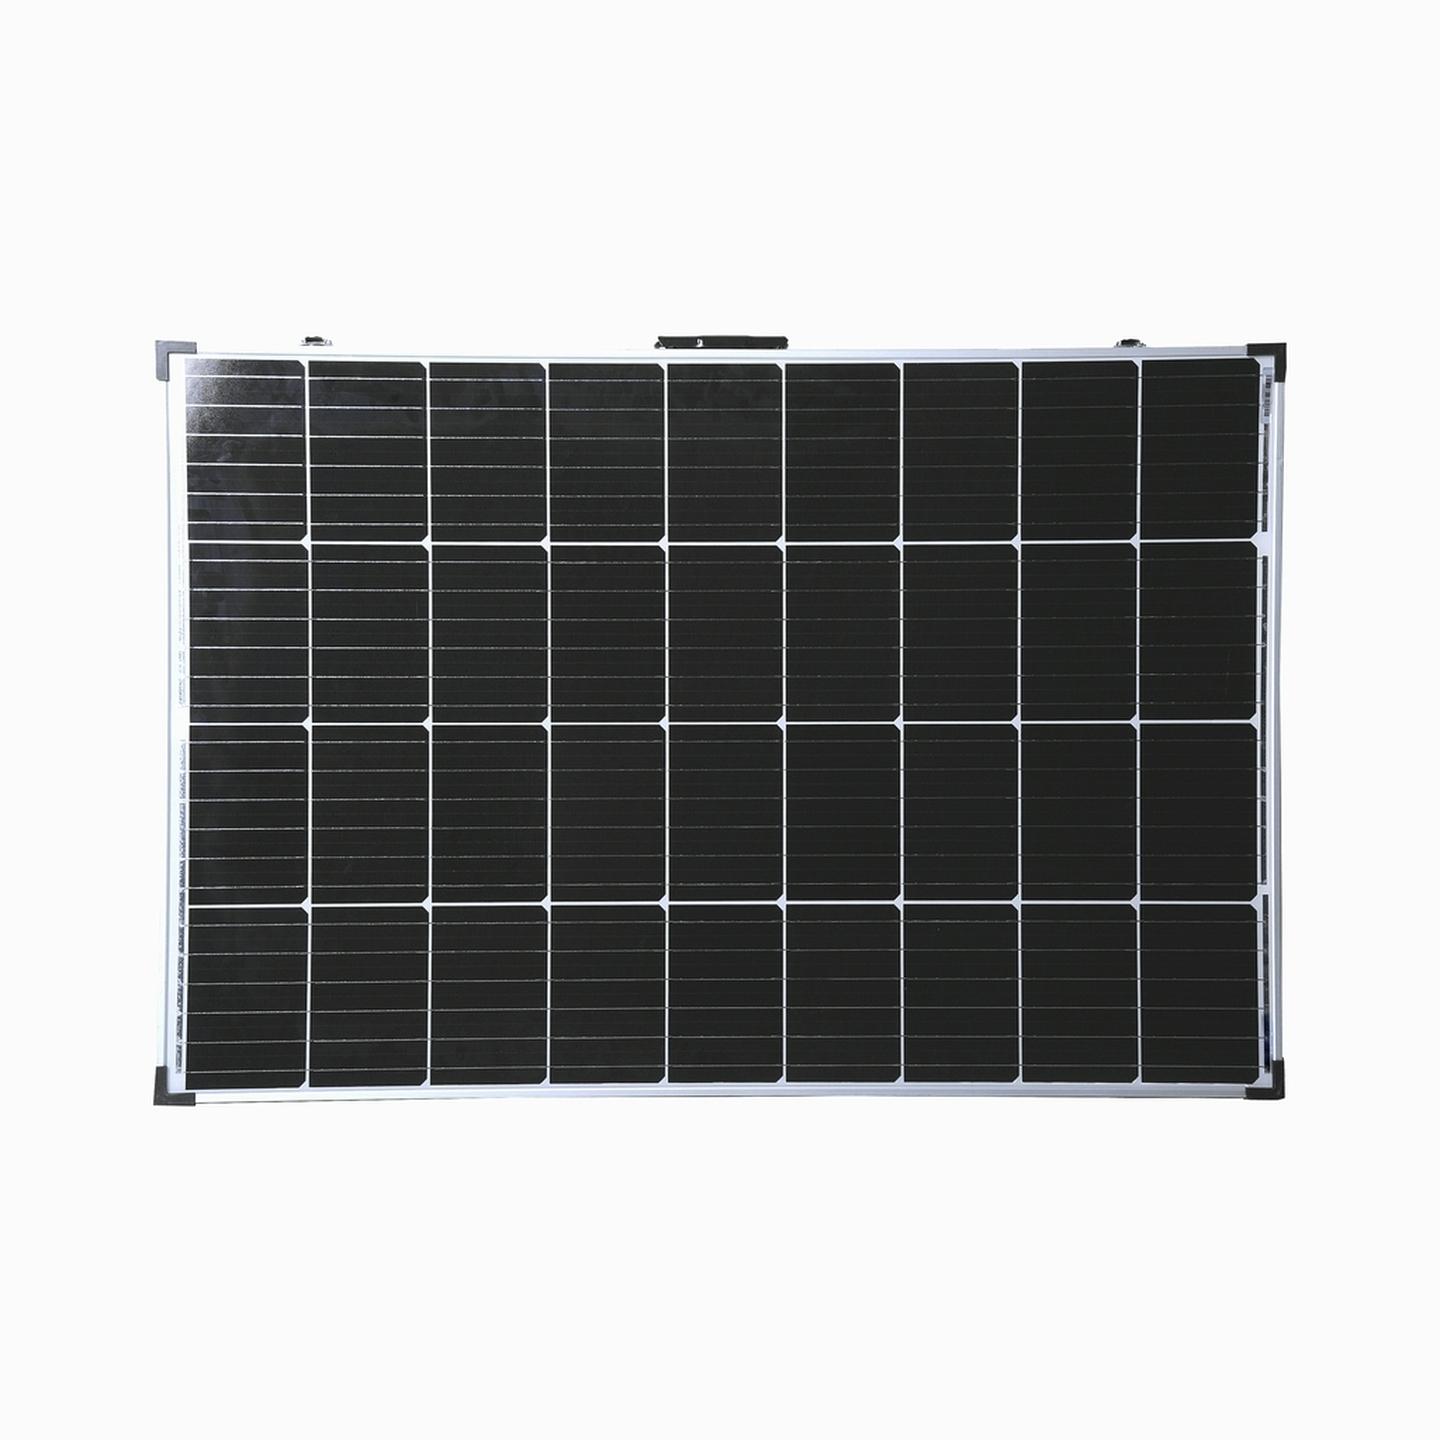 Rovin 12V 250W Folding Solar Panel